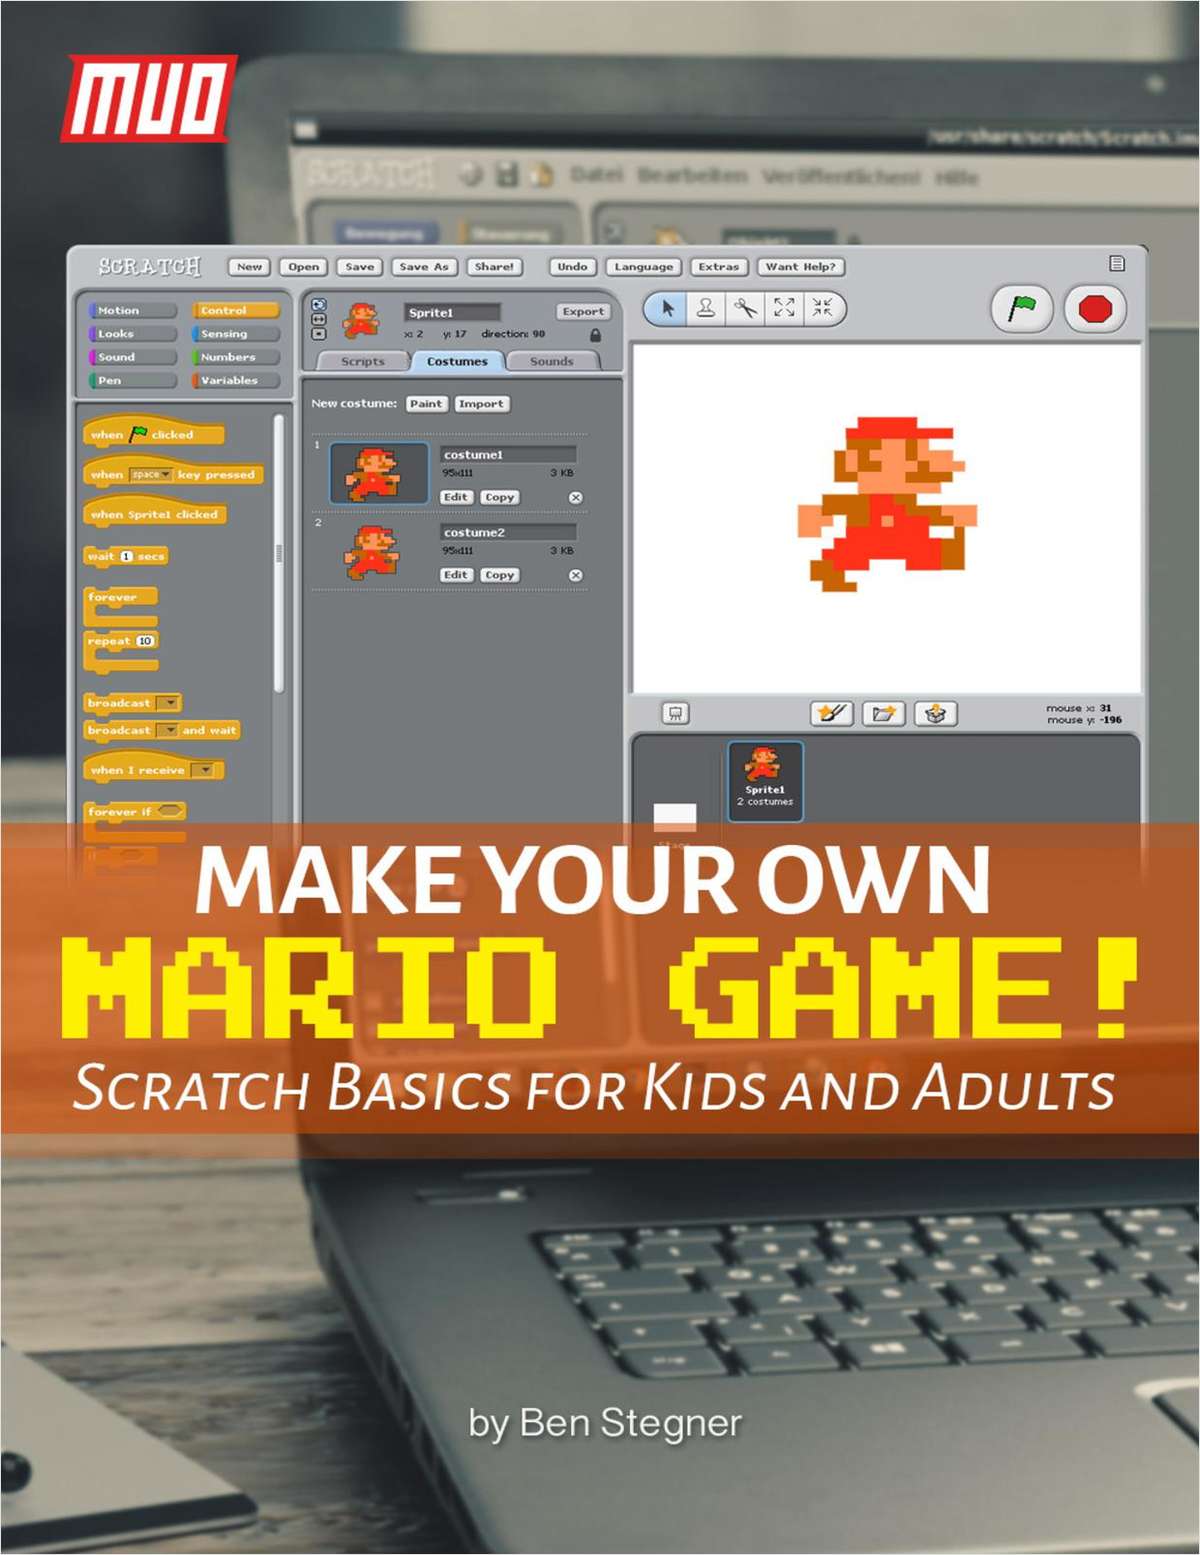 Make Your Own Mario Game!